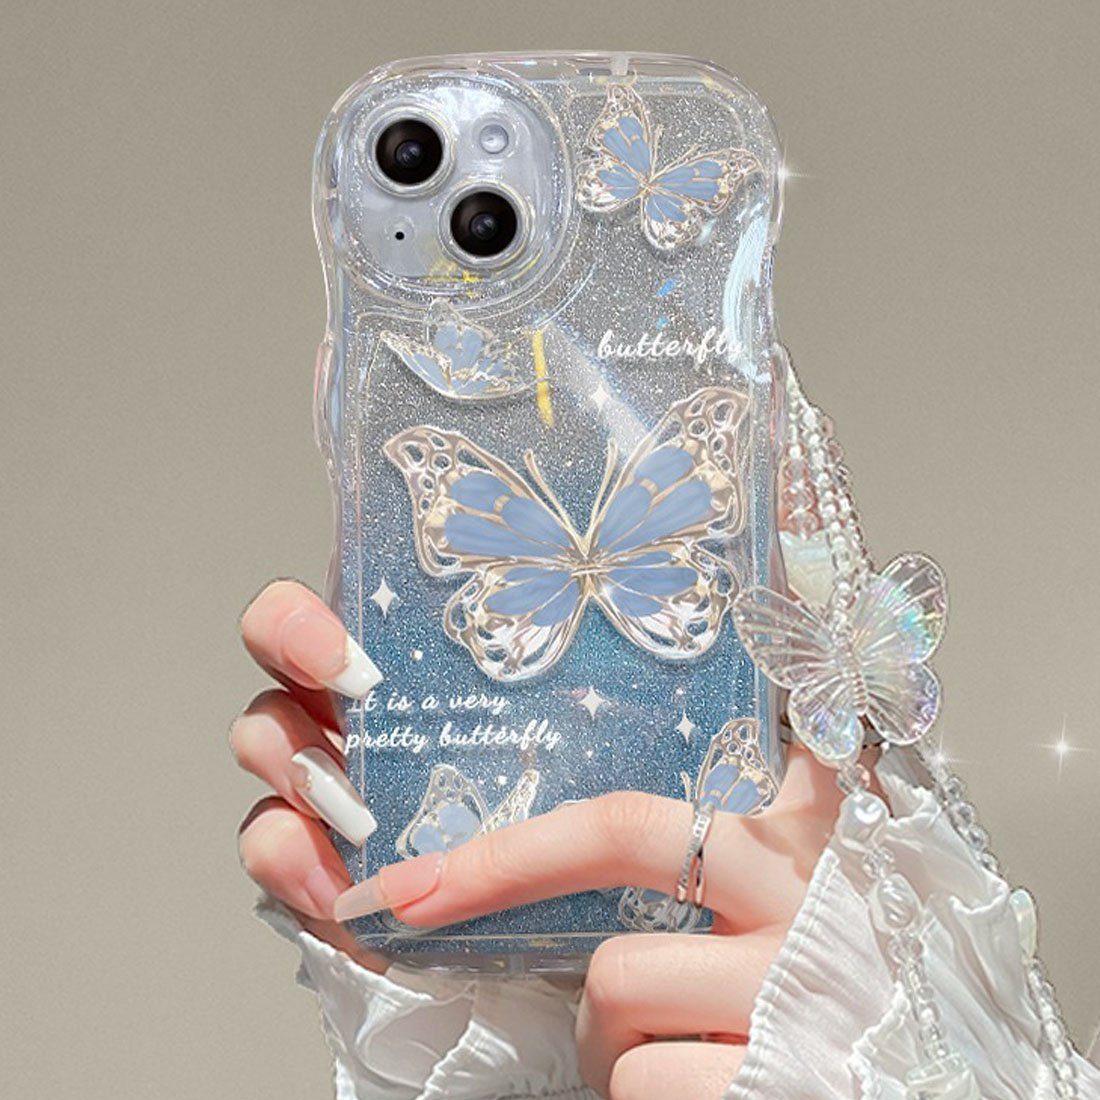 Hülle iPhone für DÖRÖY Silikonhülle,Silikon Handytasche blau 14/pro,Schmetterling Handyhülle